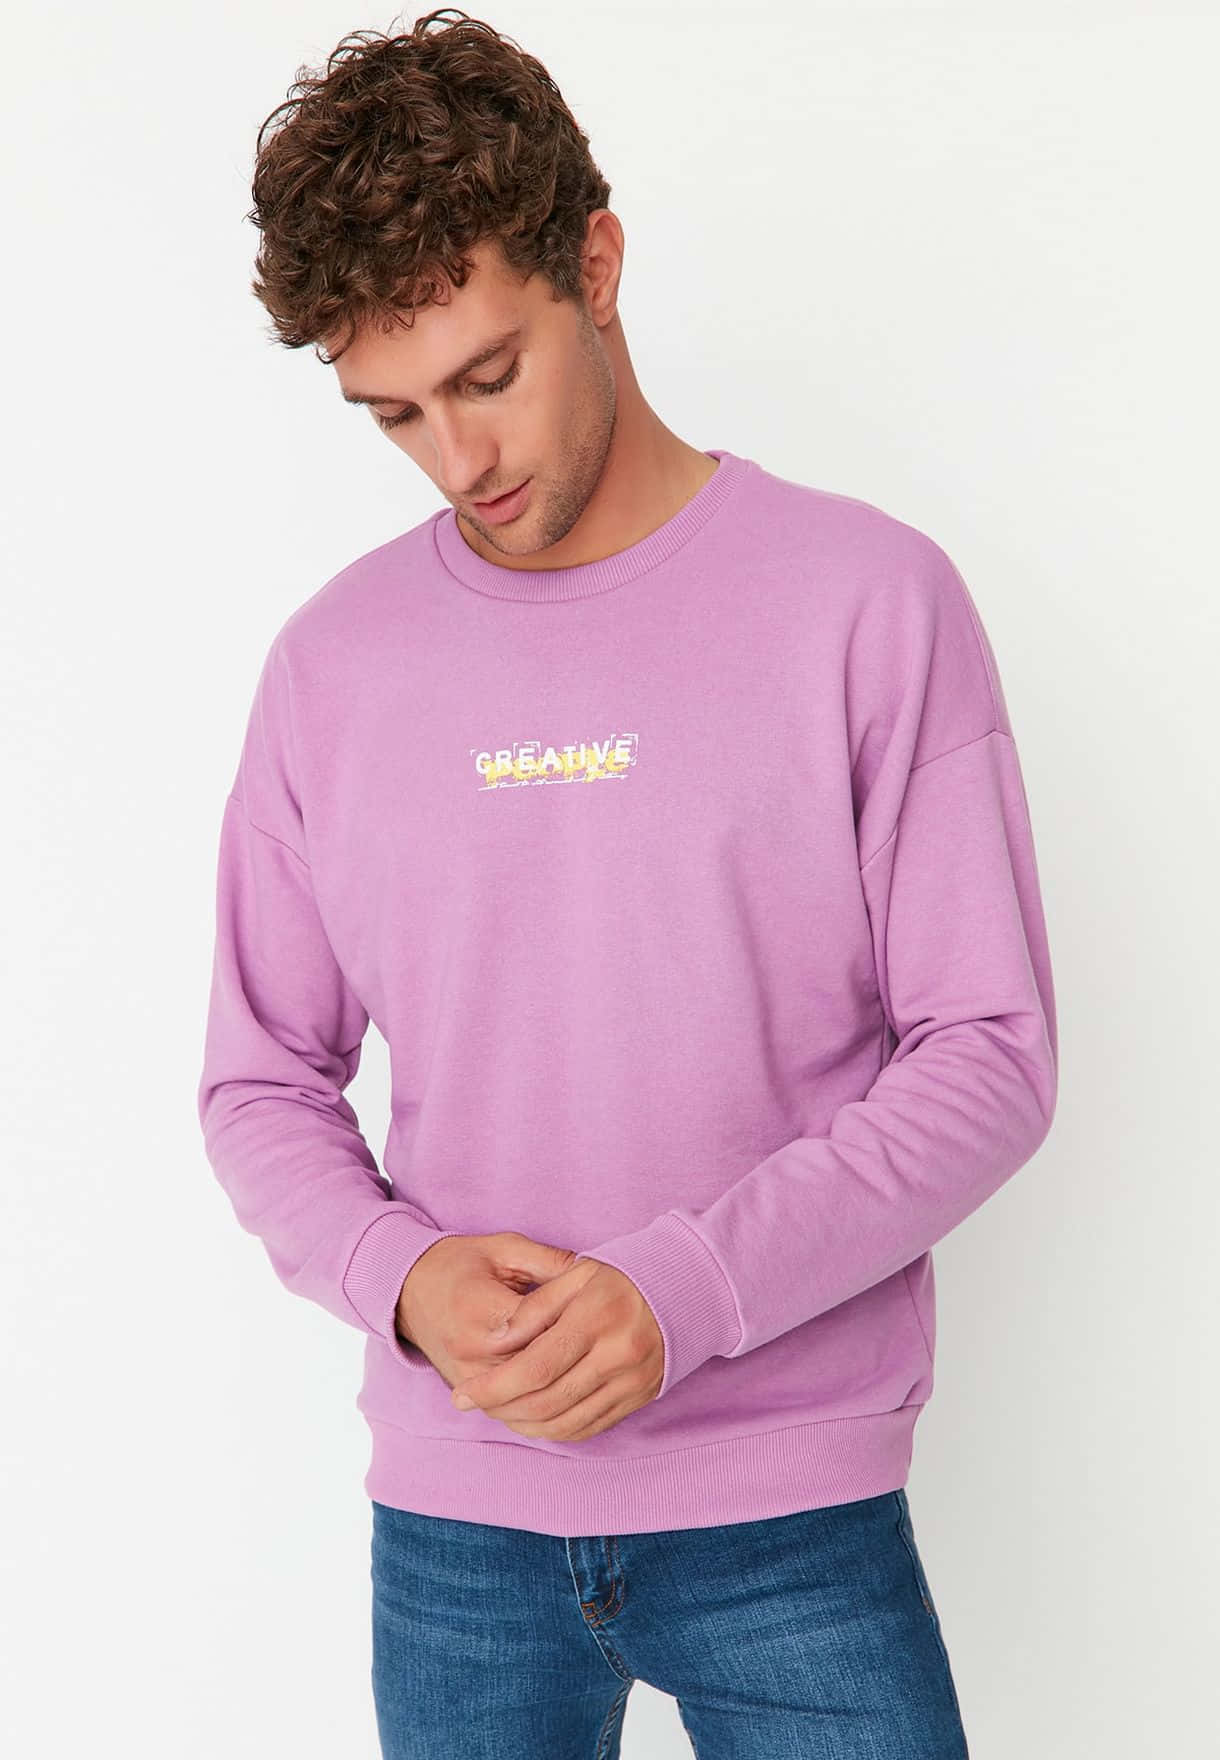 Download Look and Feel Your Best In This Trendy Purple Sweatshirt ...